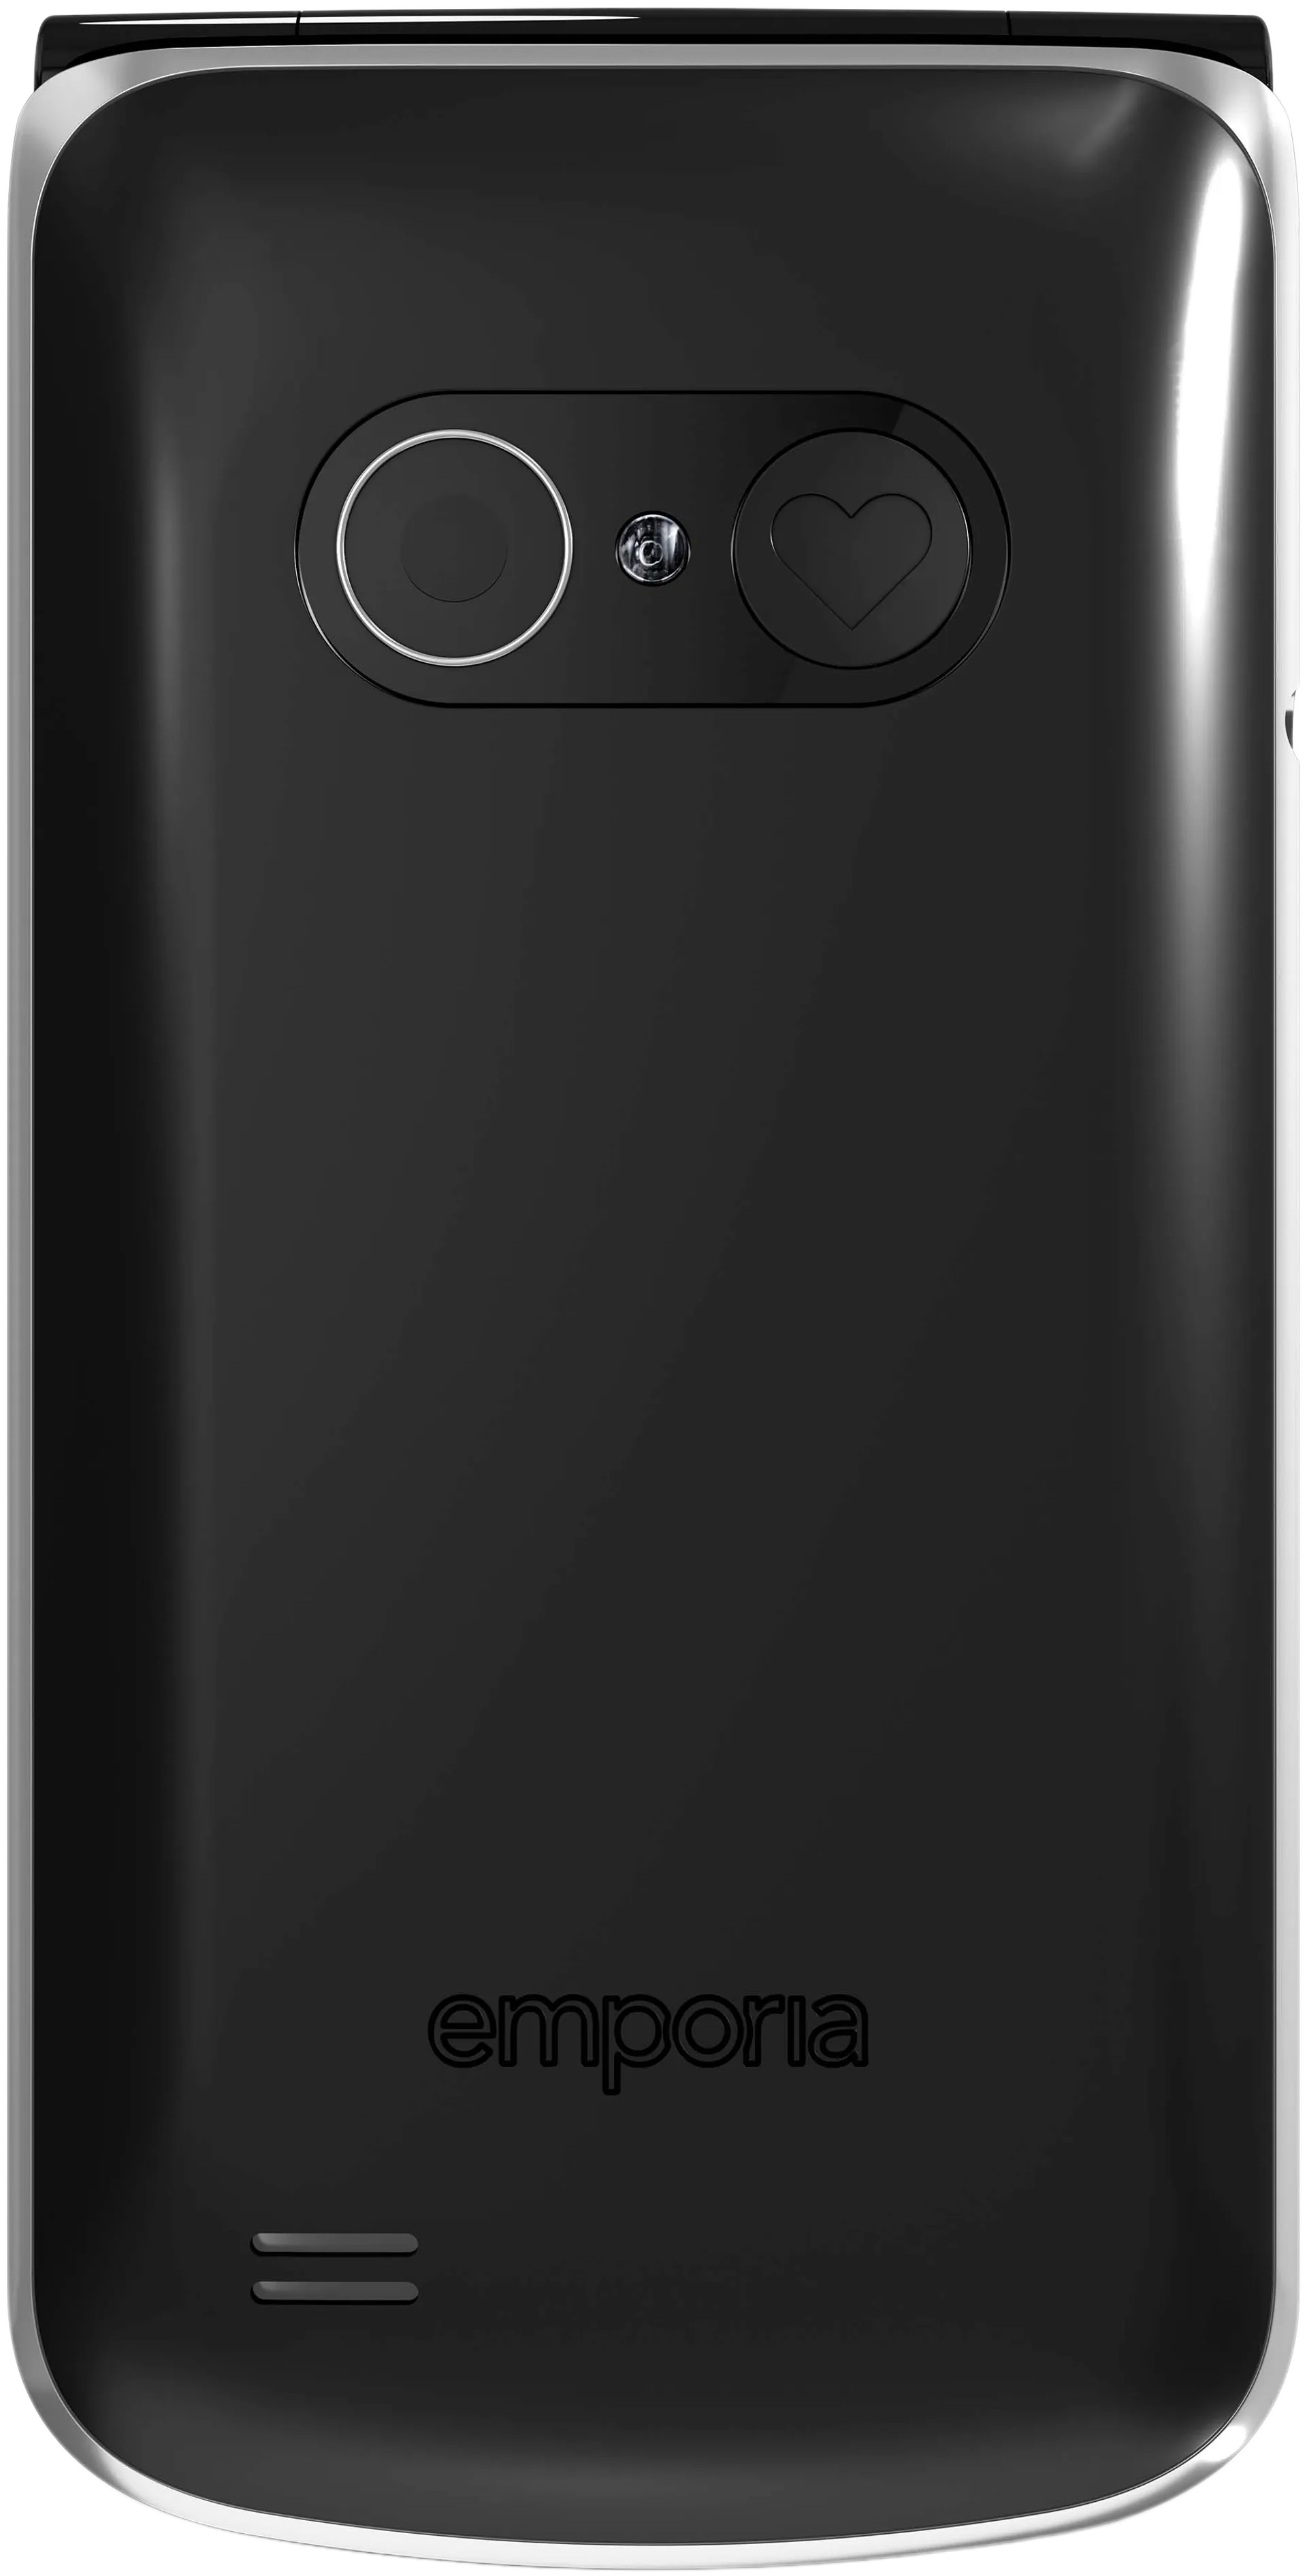 Emporia touch smart 2 4G puhelin, musta - 7